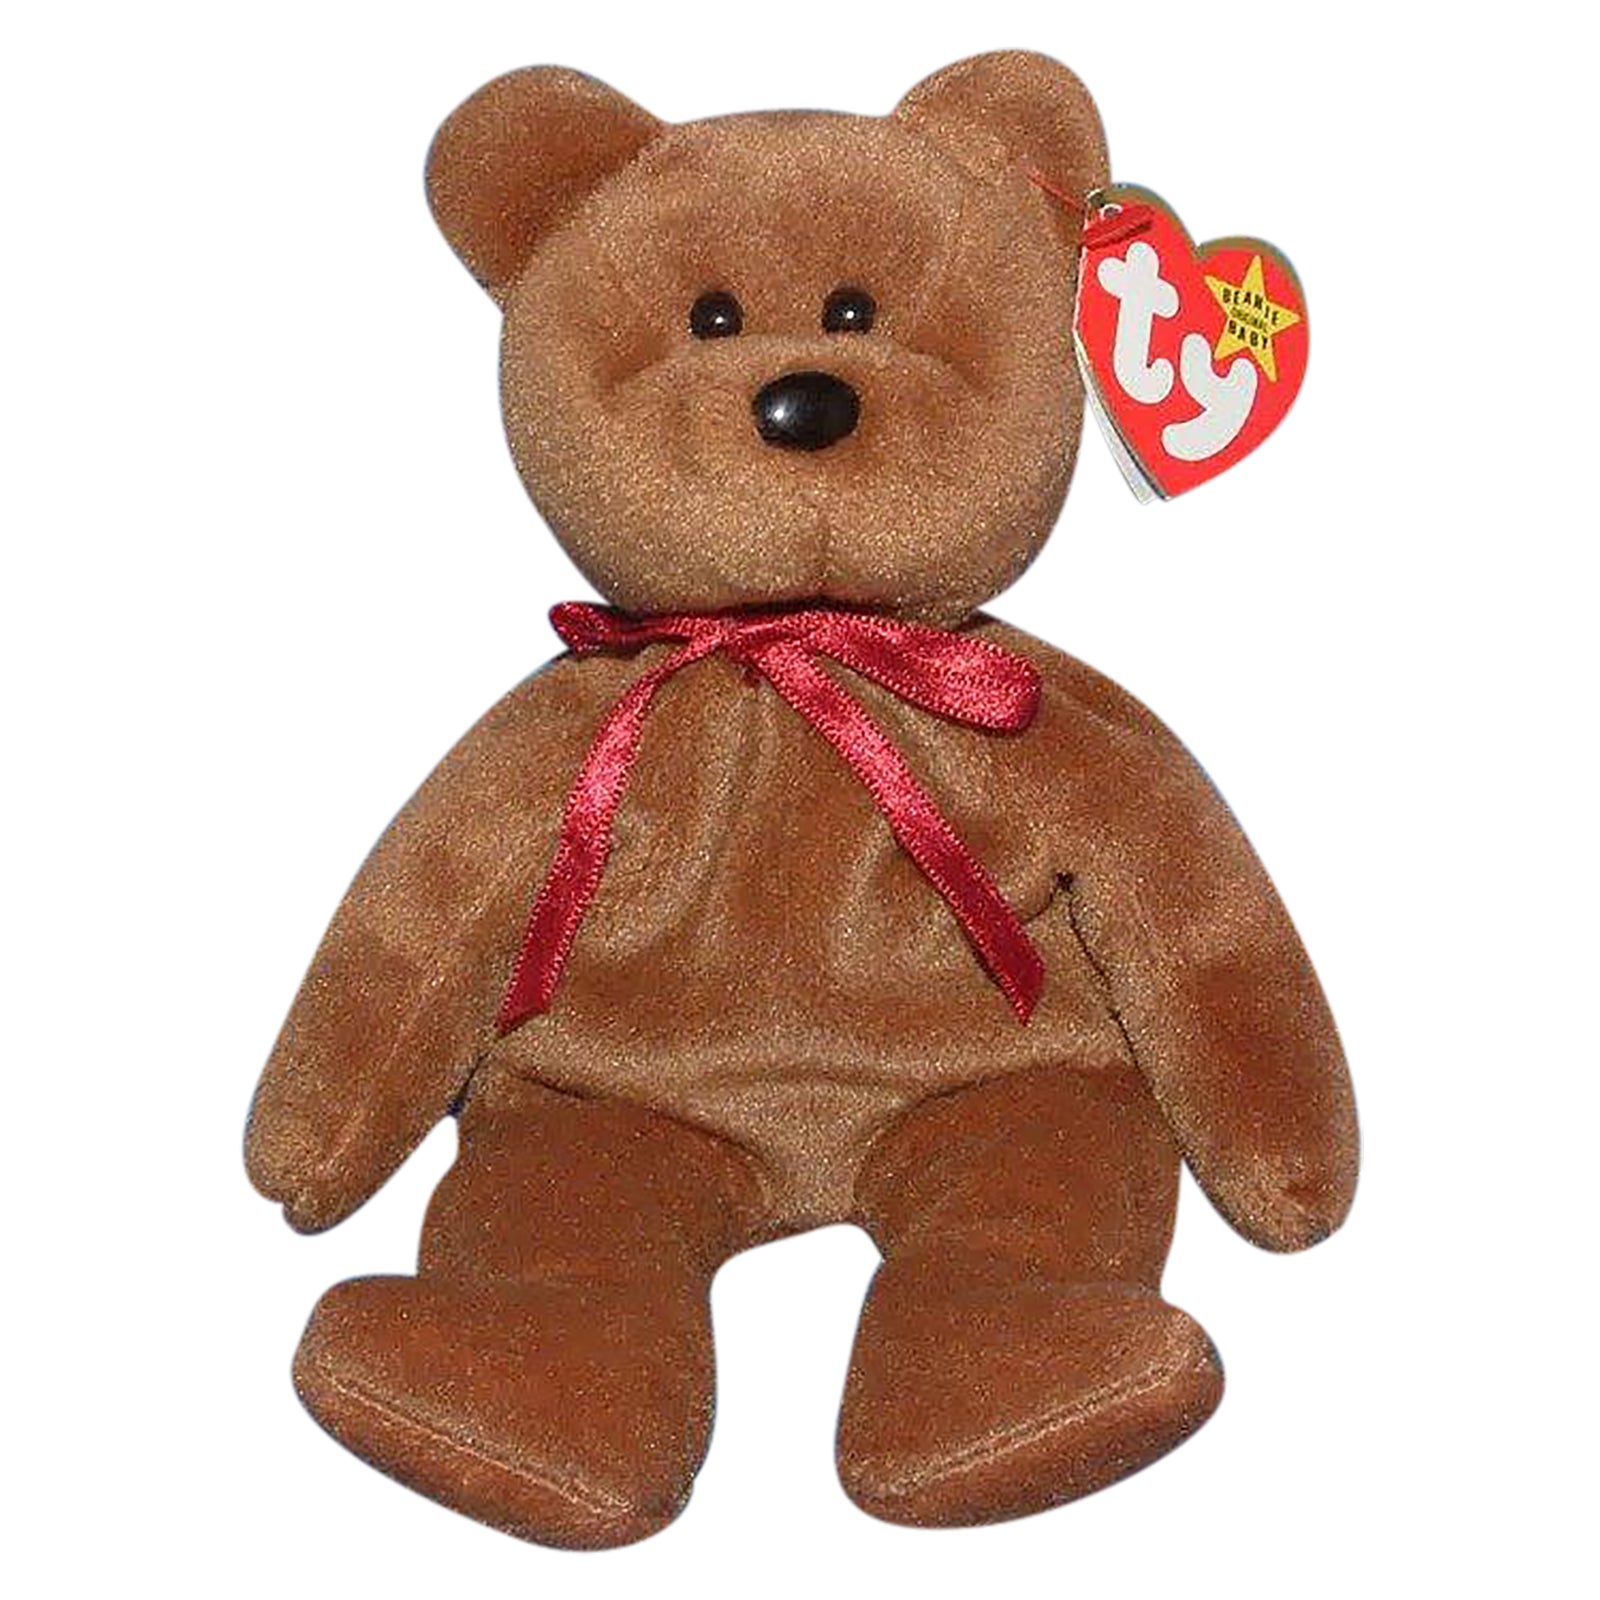 Ty Beanie Baby Teddy the Bear Brown New Face